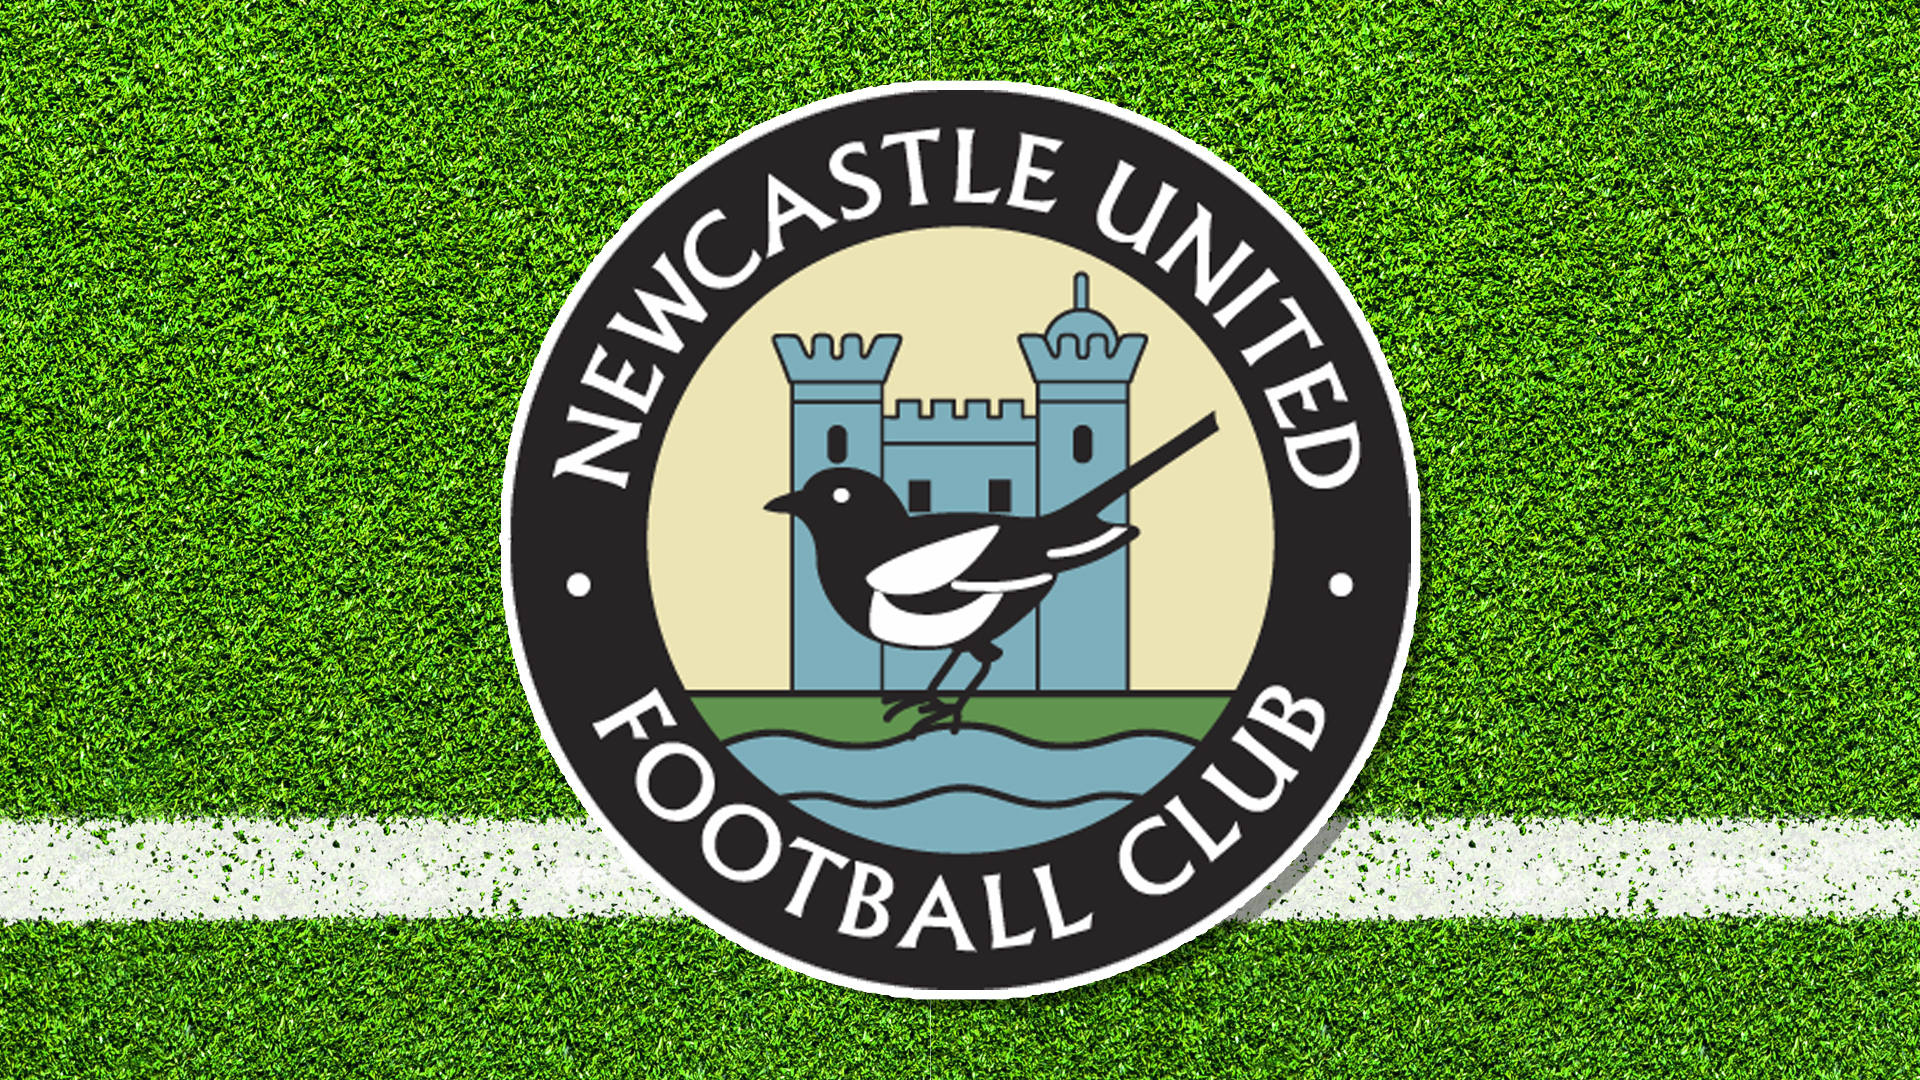 A Newcastle United club badge